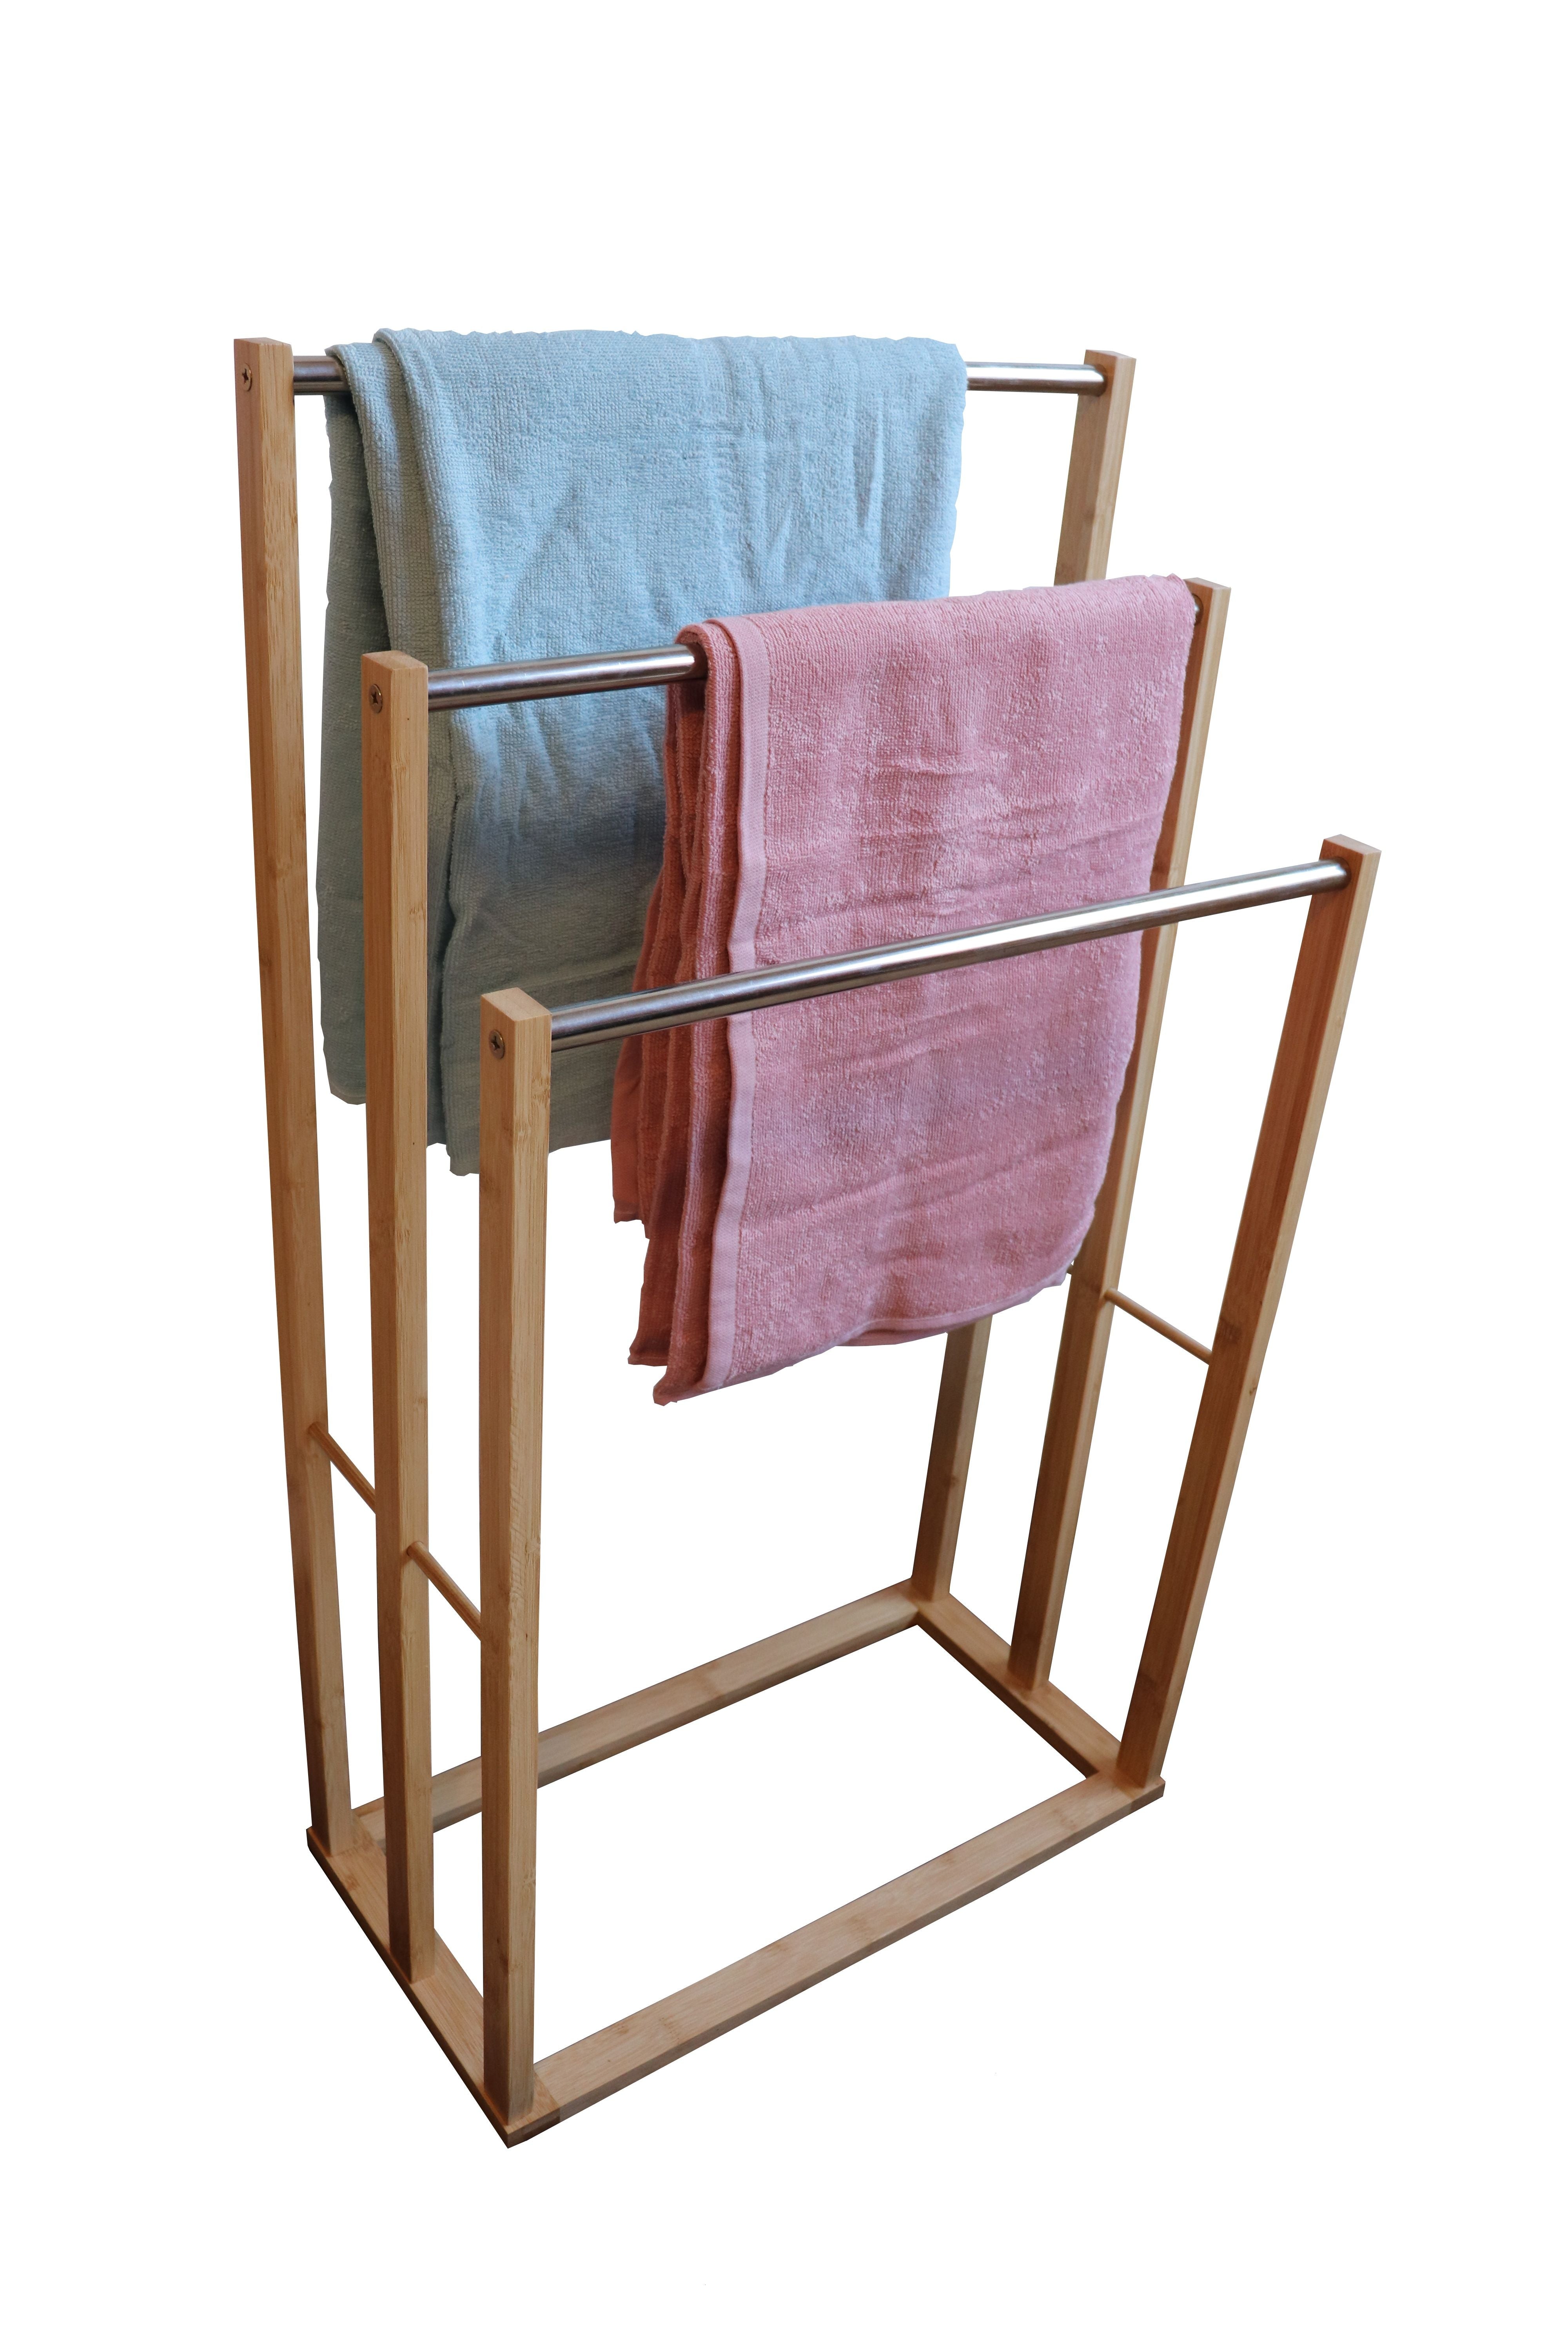 Bamboo Towel Bar Metal Holder Rack 3-Tier Freestanding for Bathroom and Bedroom - SILBERSHELL